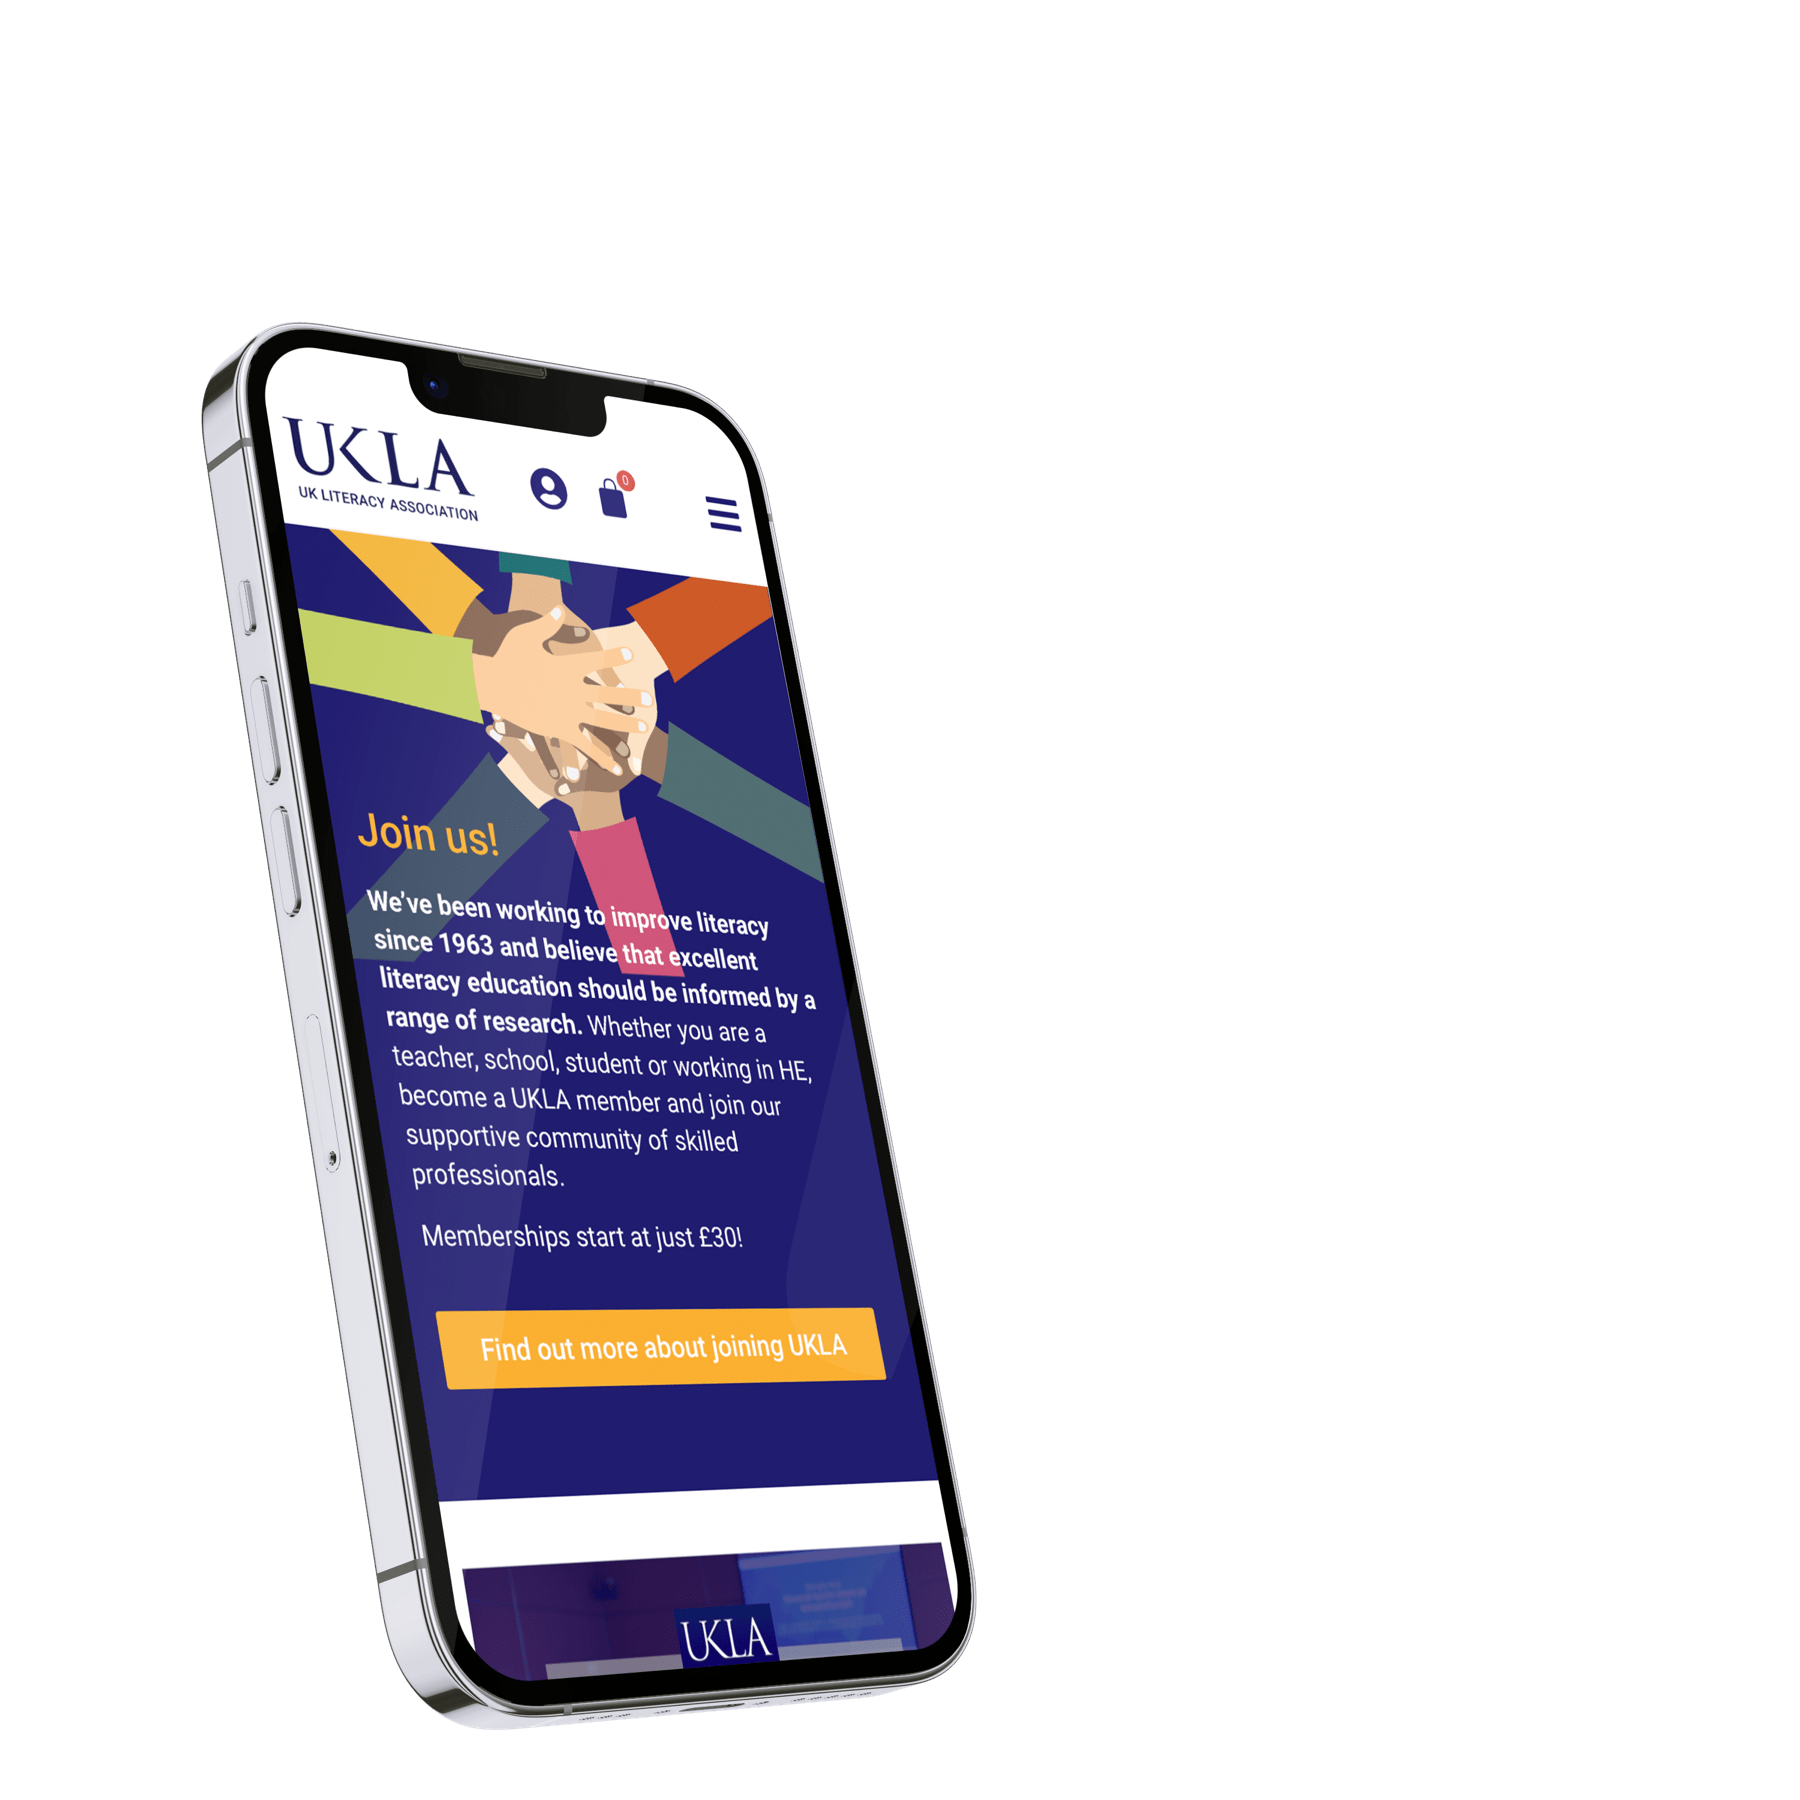 Iphone displaying UKLA website